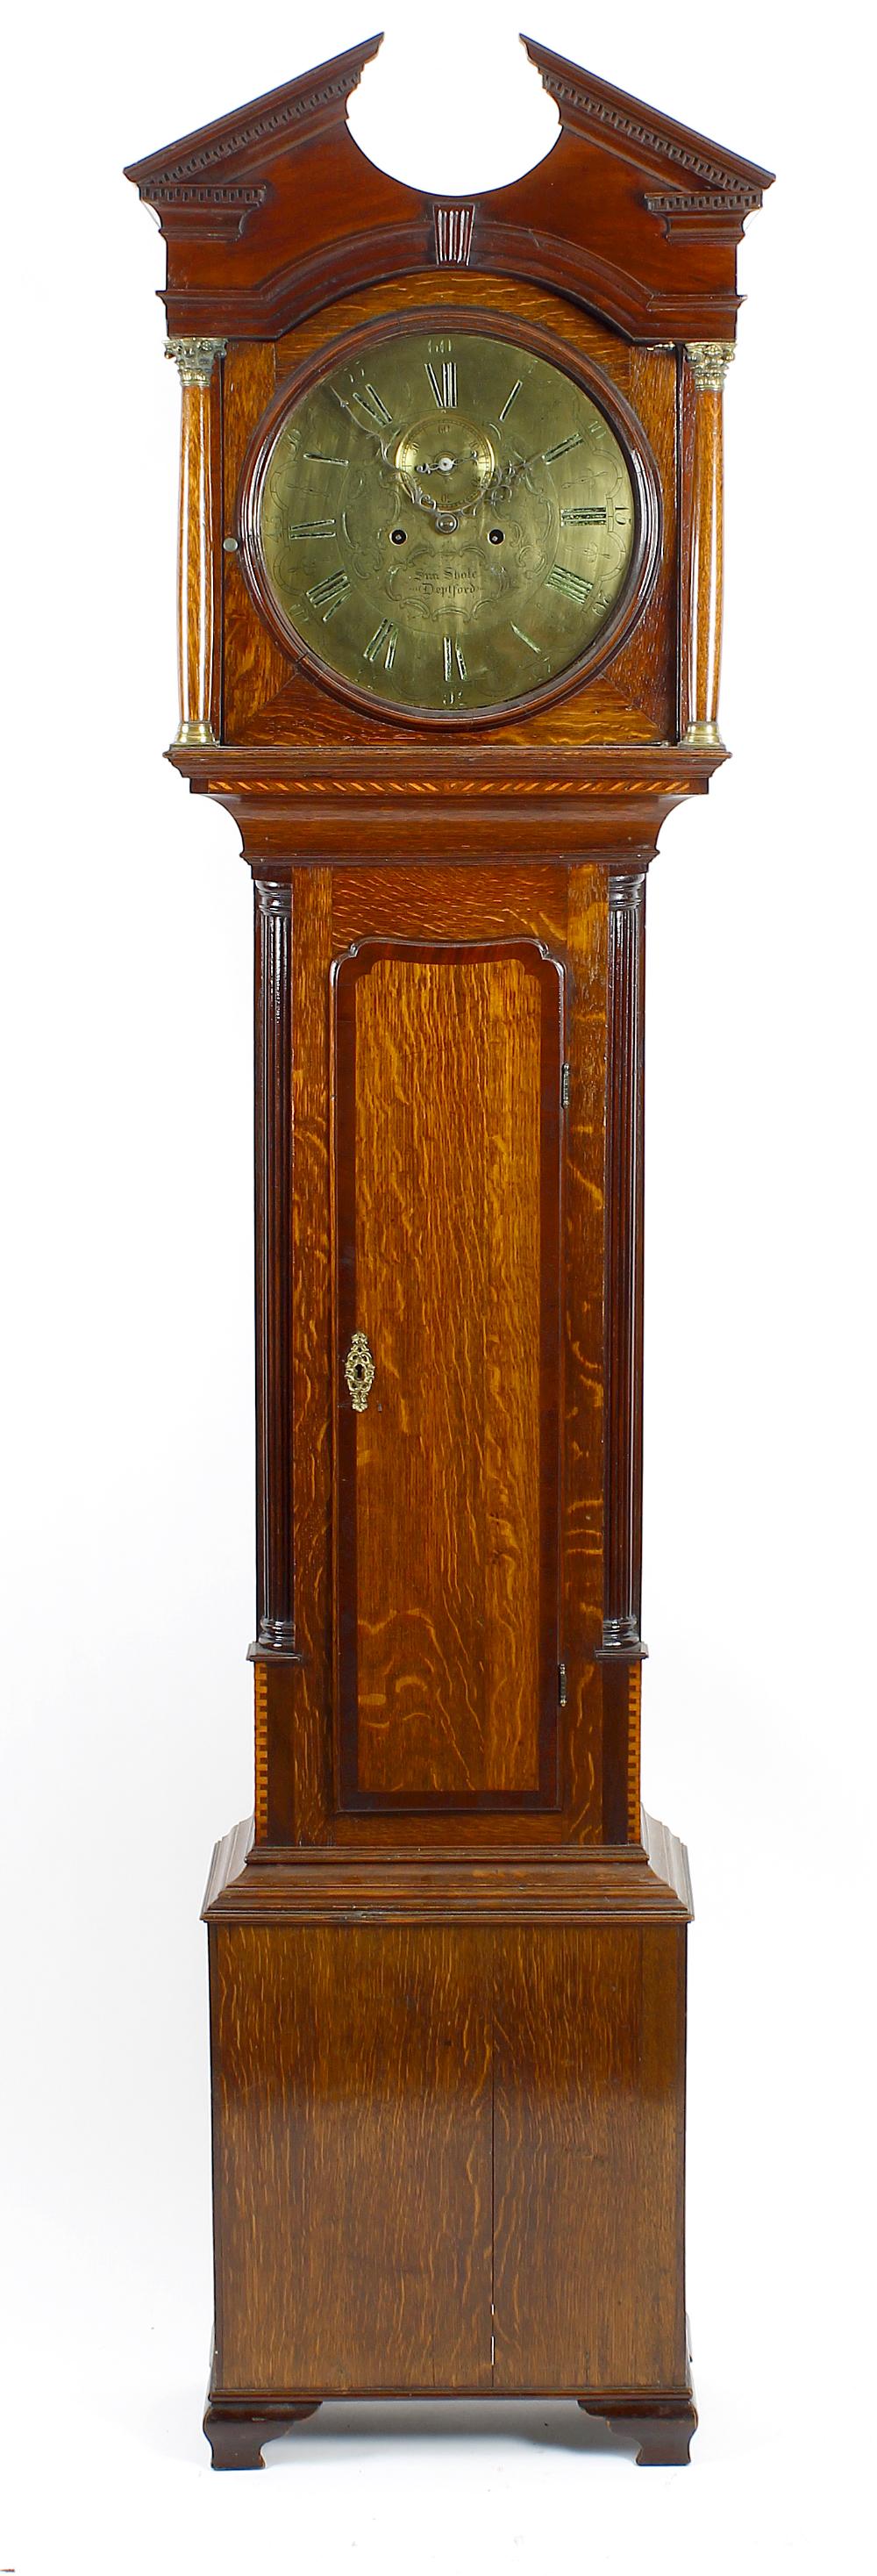 An early 19th century oak and mahogany-cased 8-day brass dial longcase clockSimeon Shole,